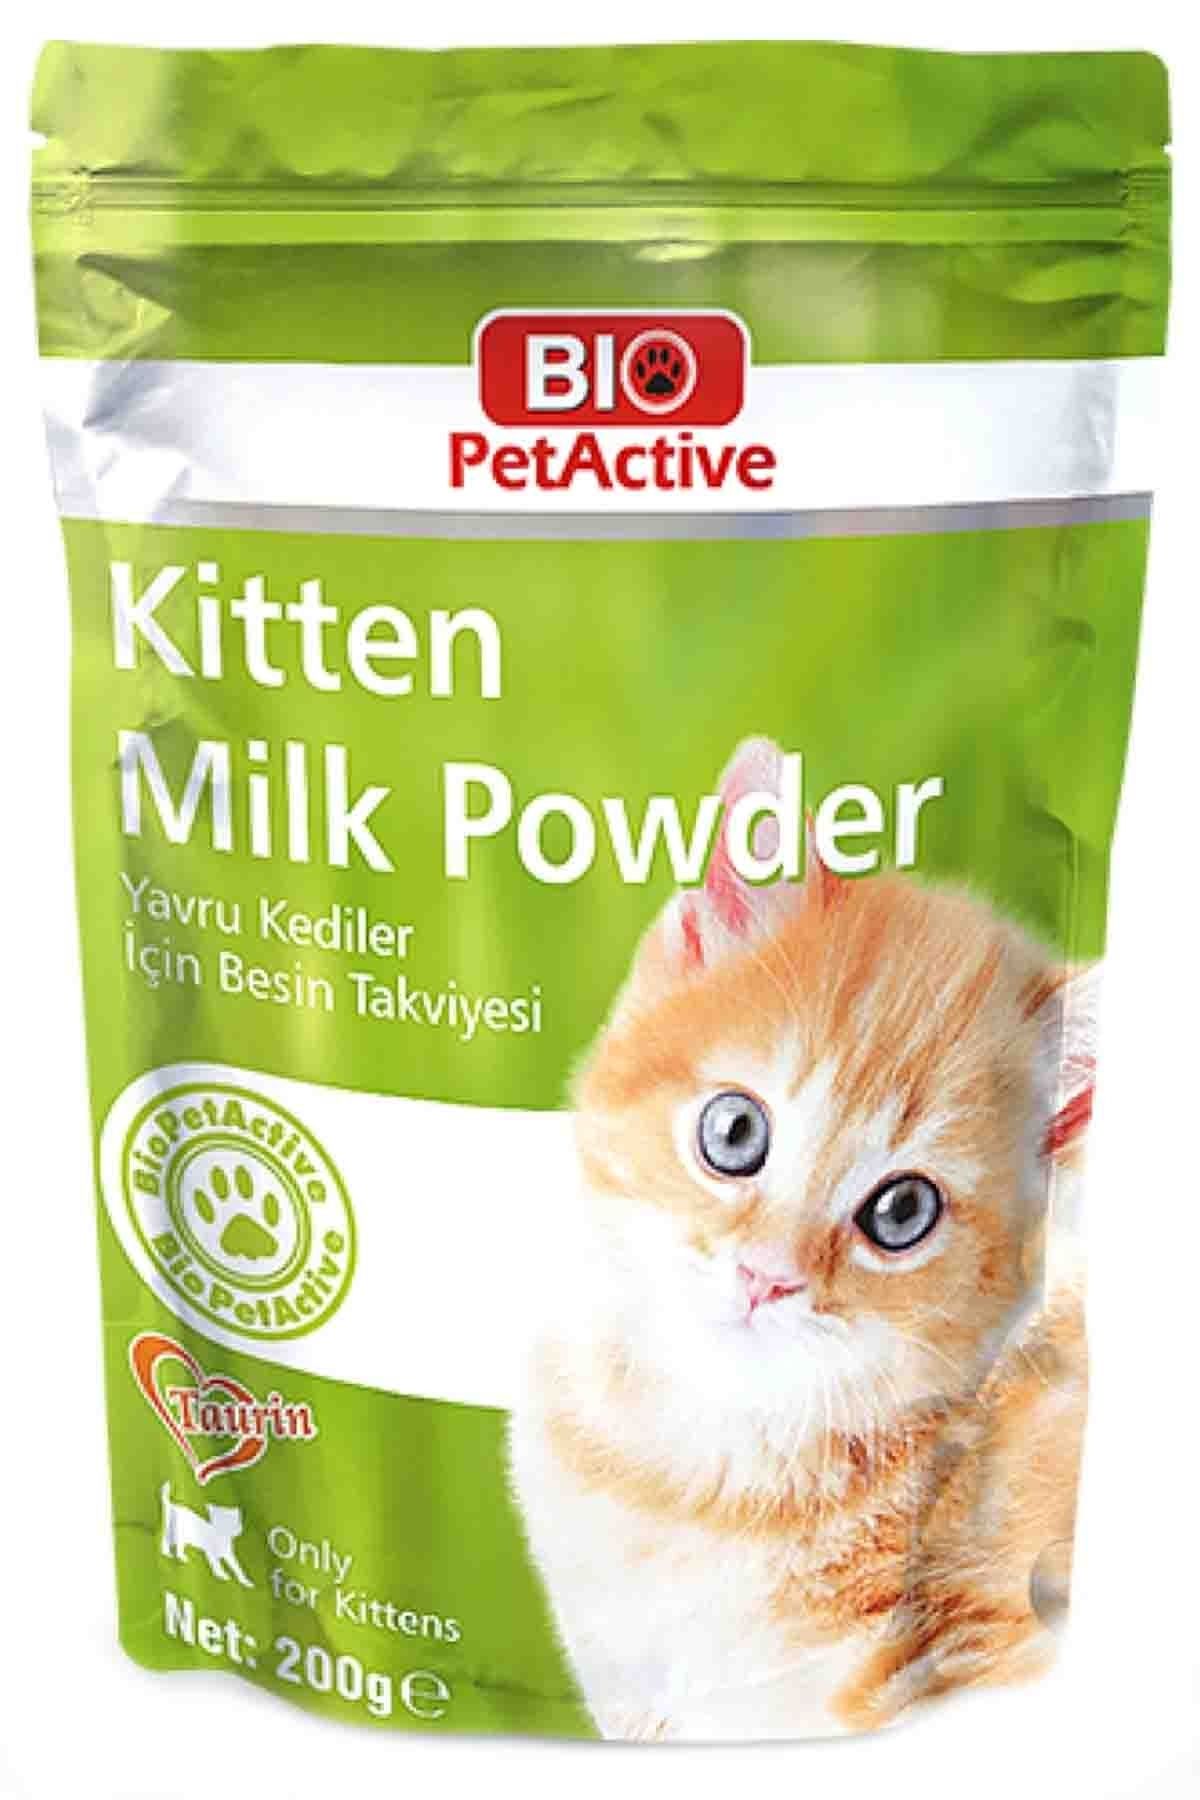 Biopet active süt tozu yavru kedi 200 gr